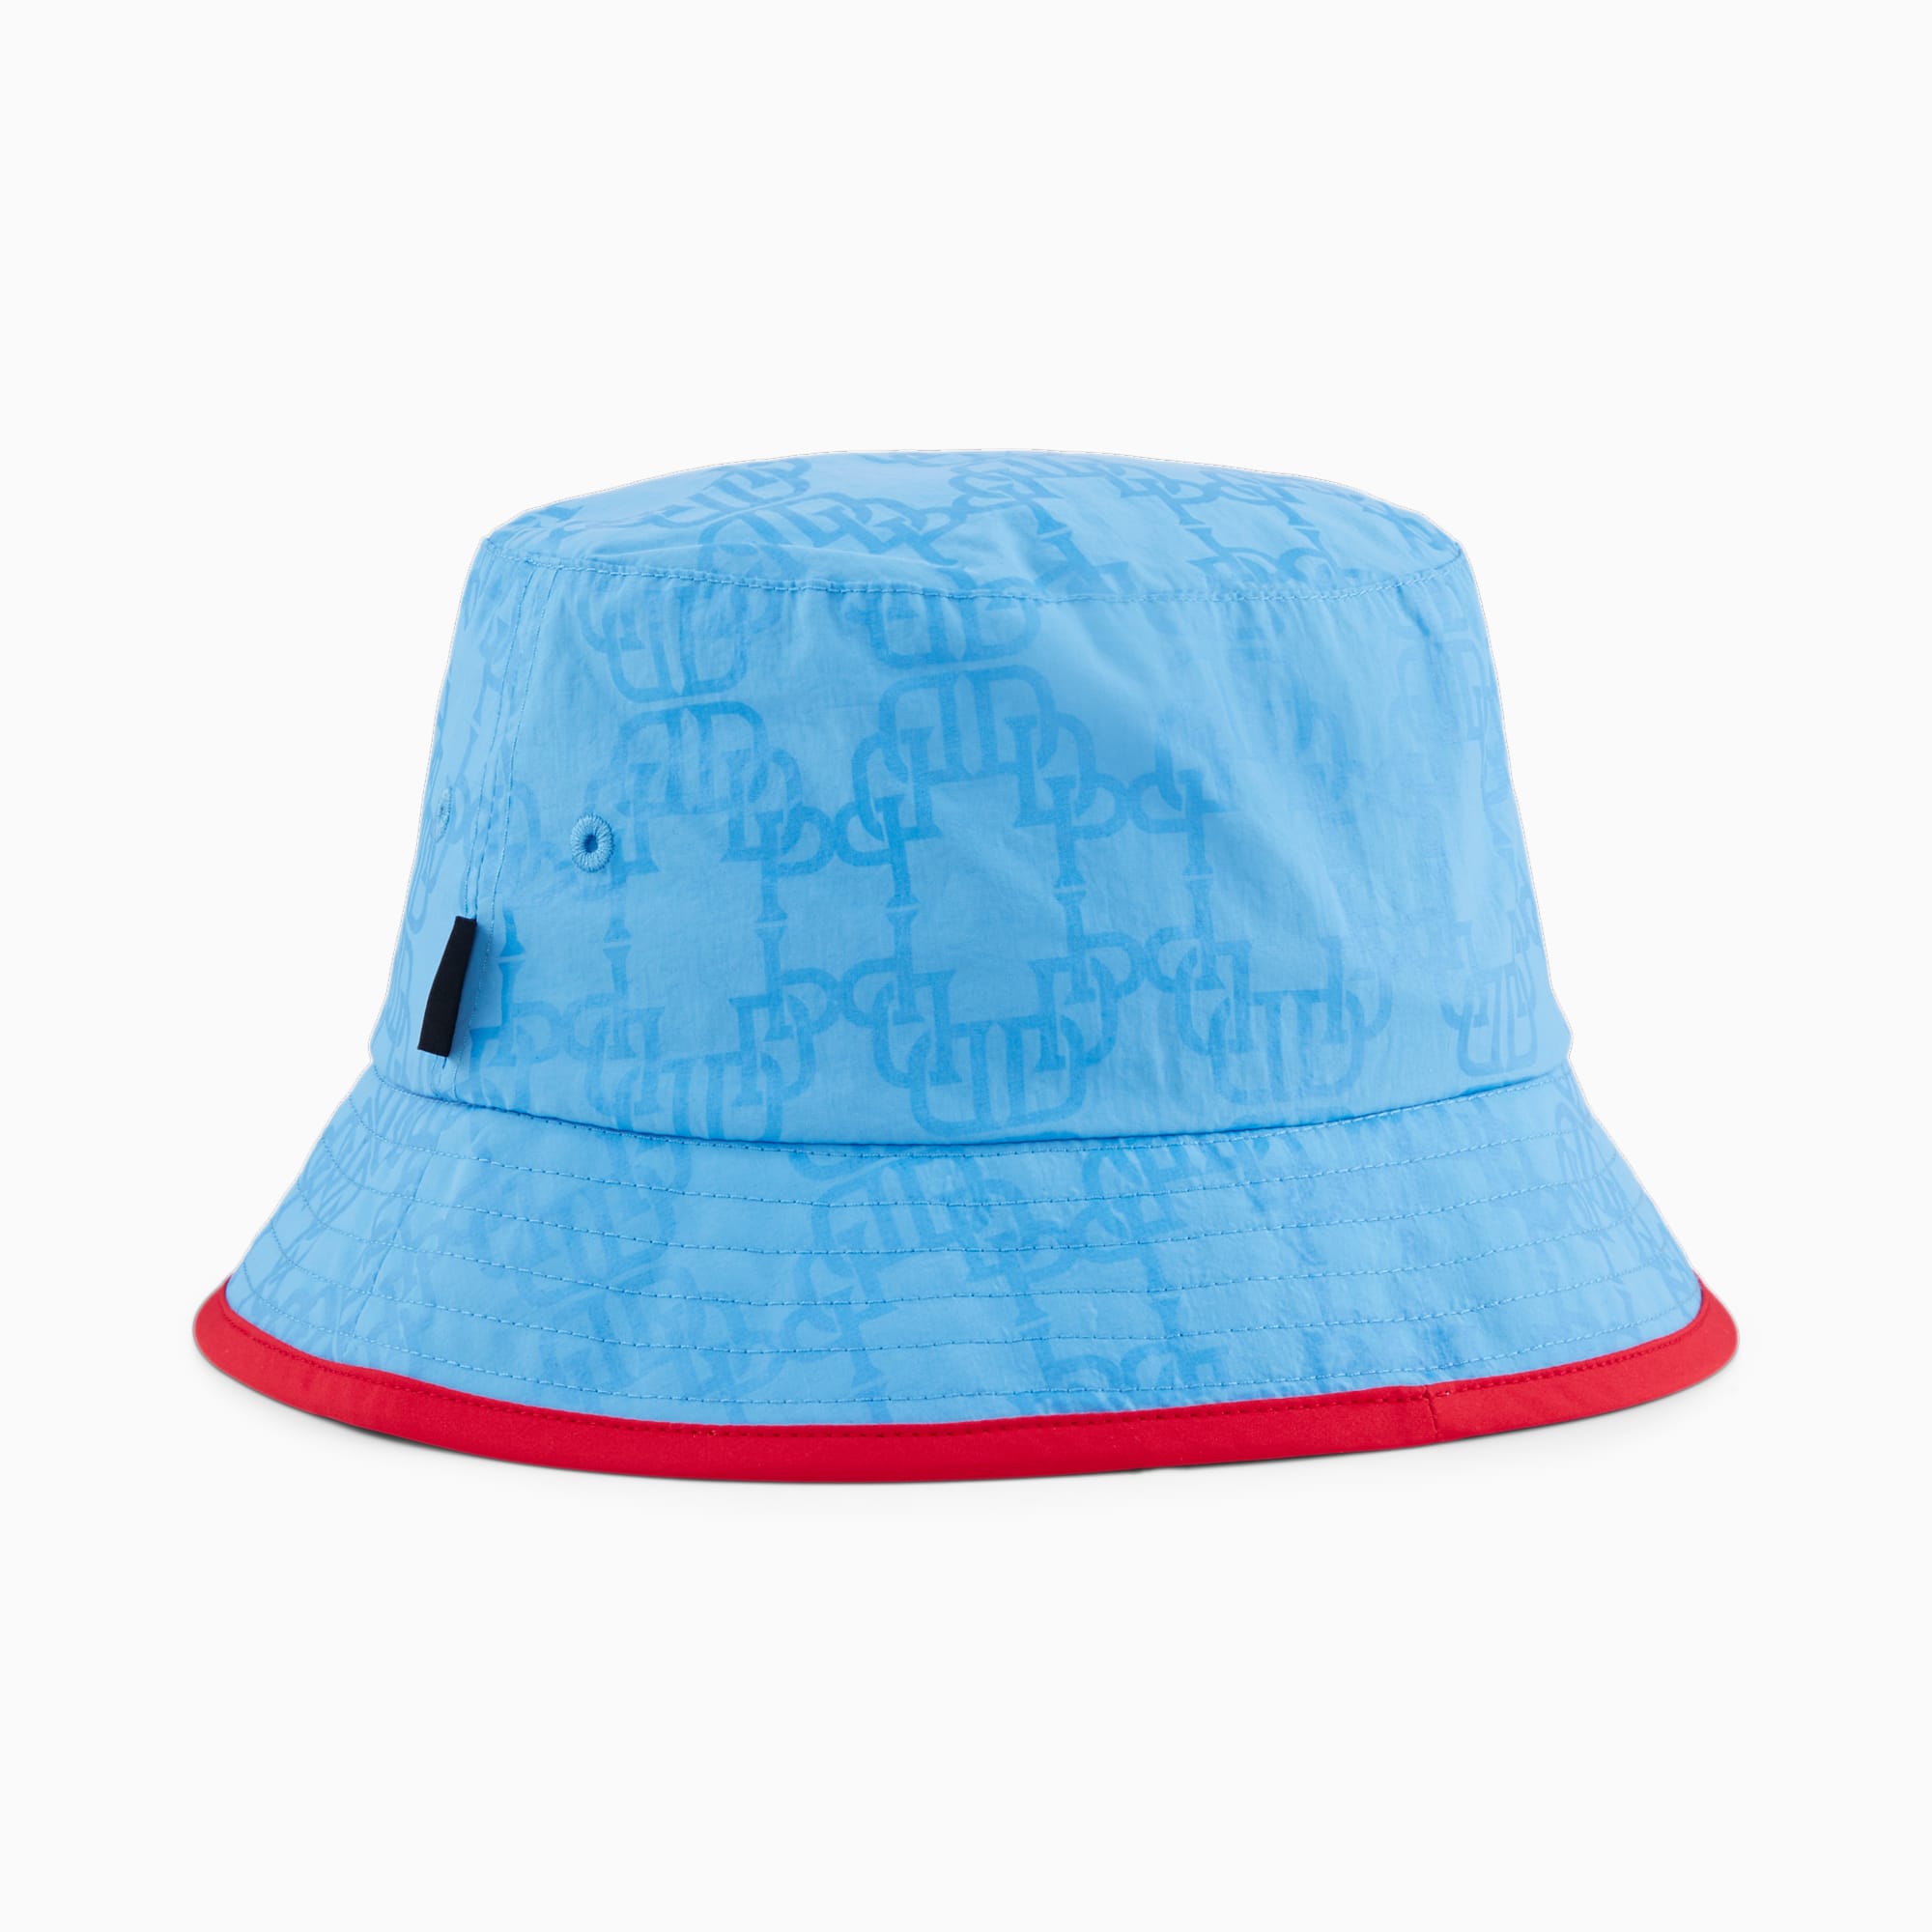 PUMA X DAPPER DAN Bucket Hat, Blau, Größe: L/XL, Accessoires